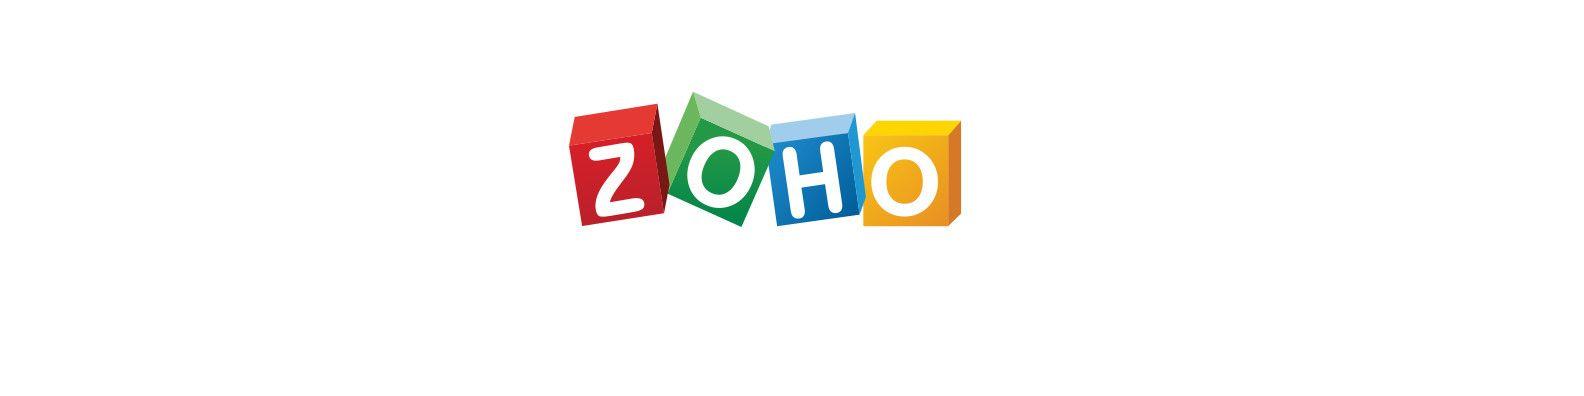 Zoho Logo - Zoho Corporation